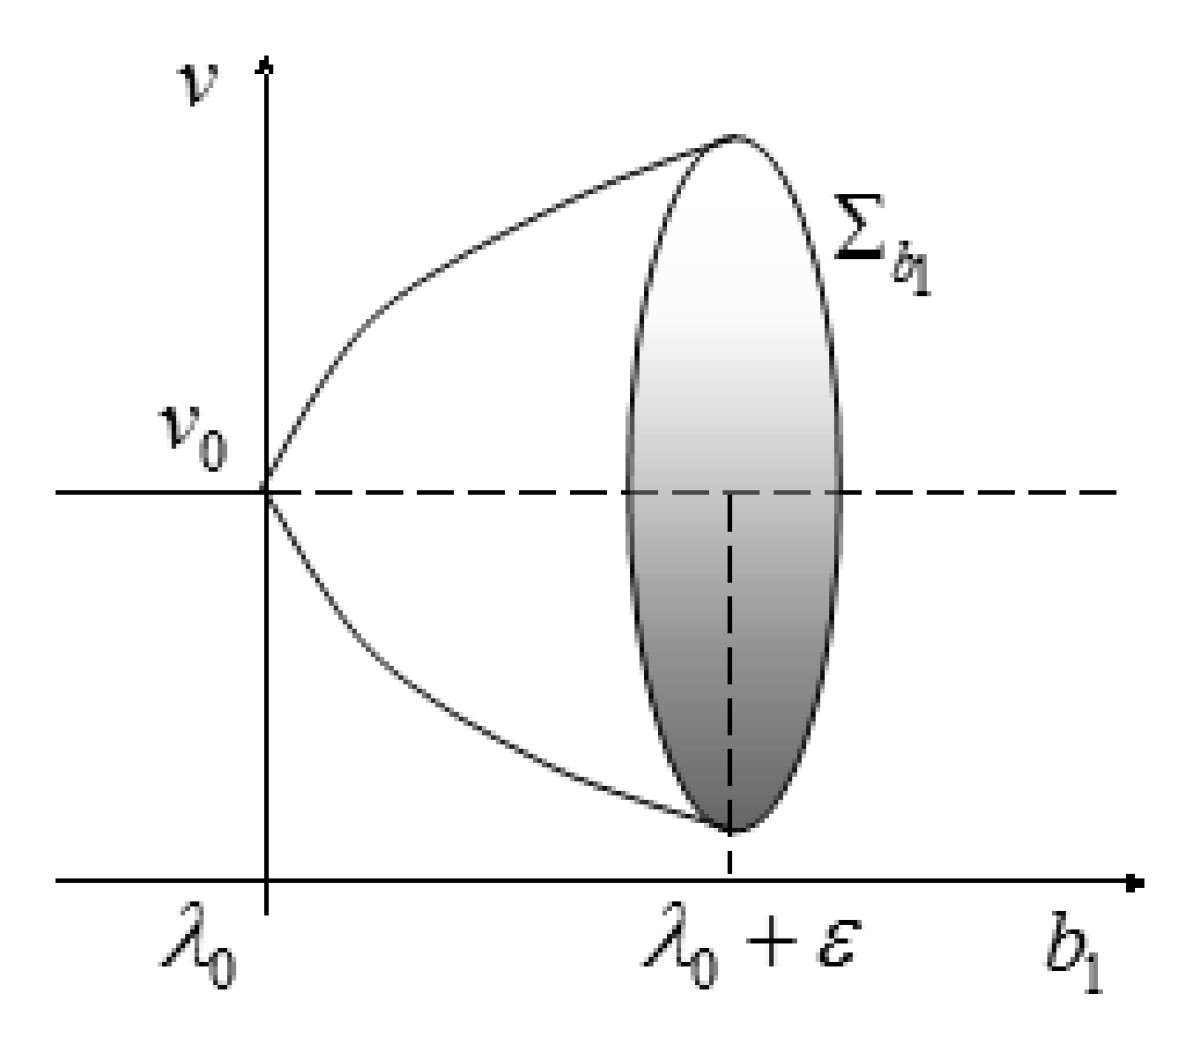 Figure 1